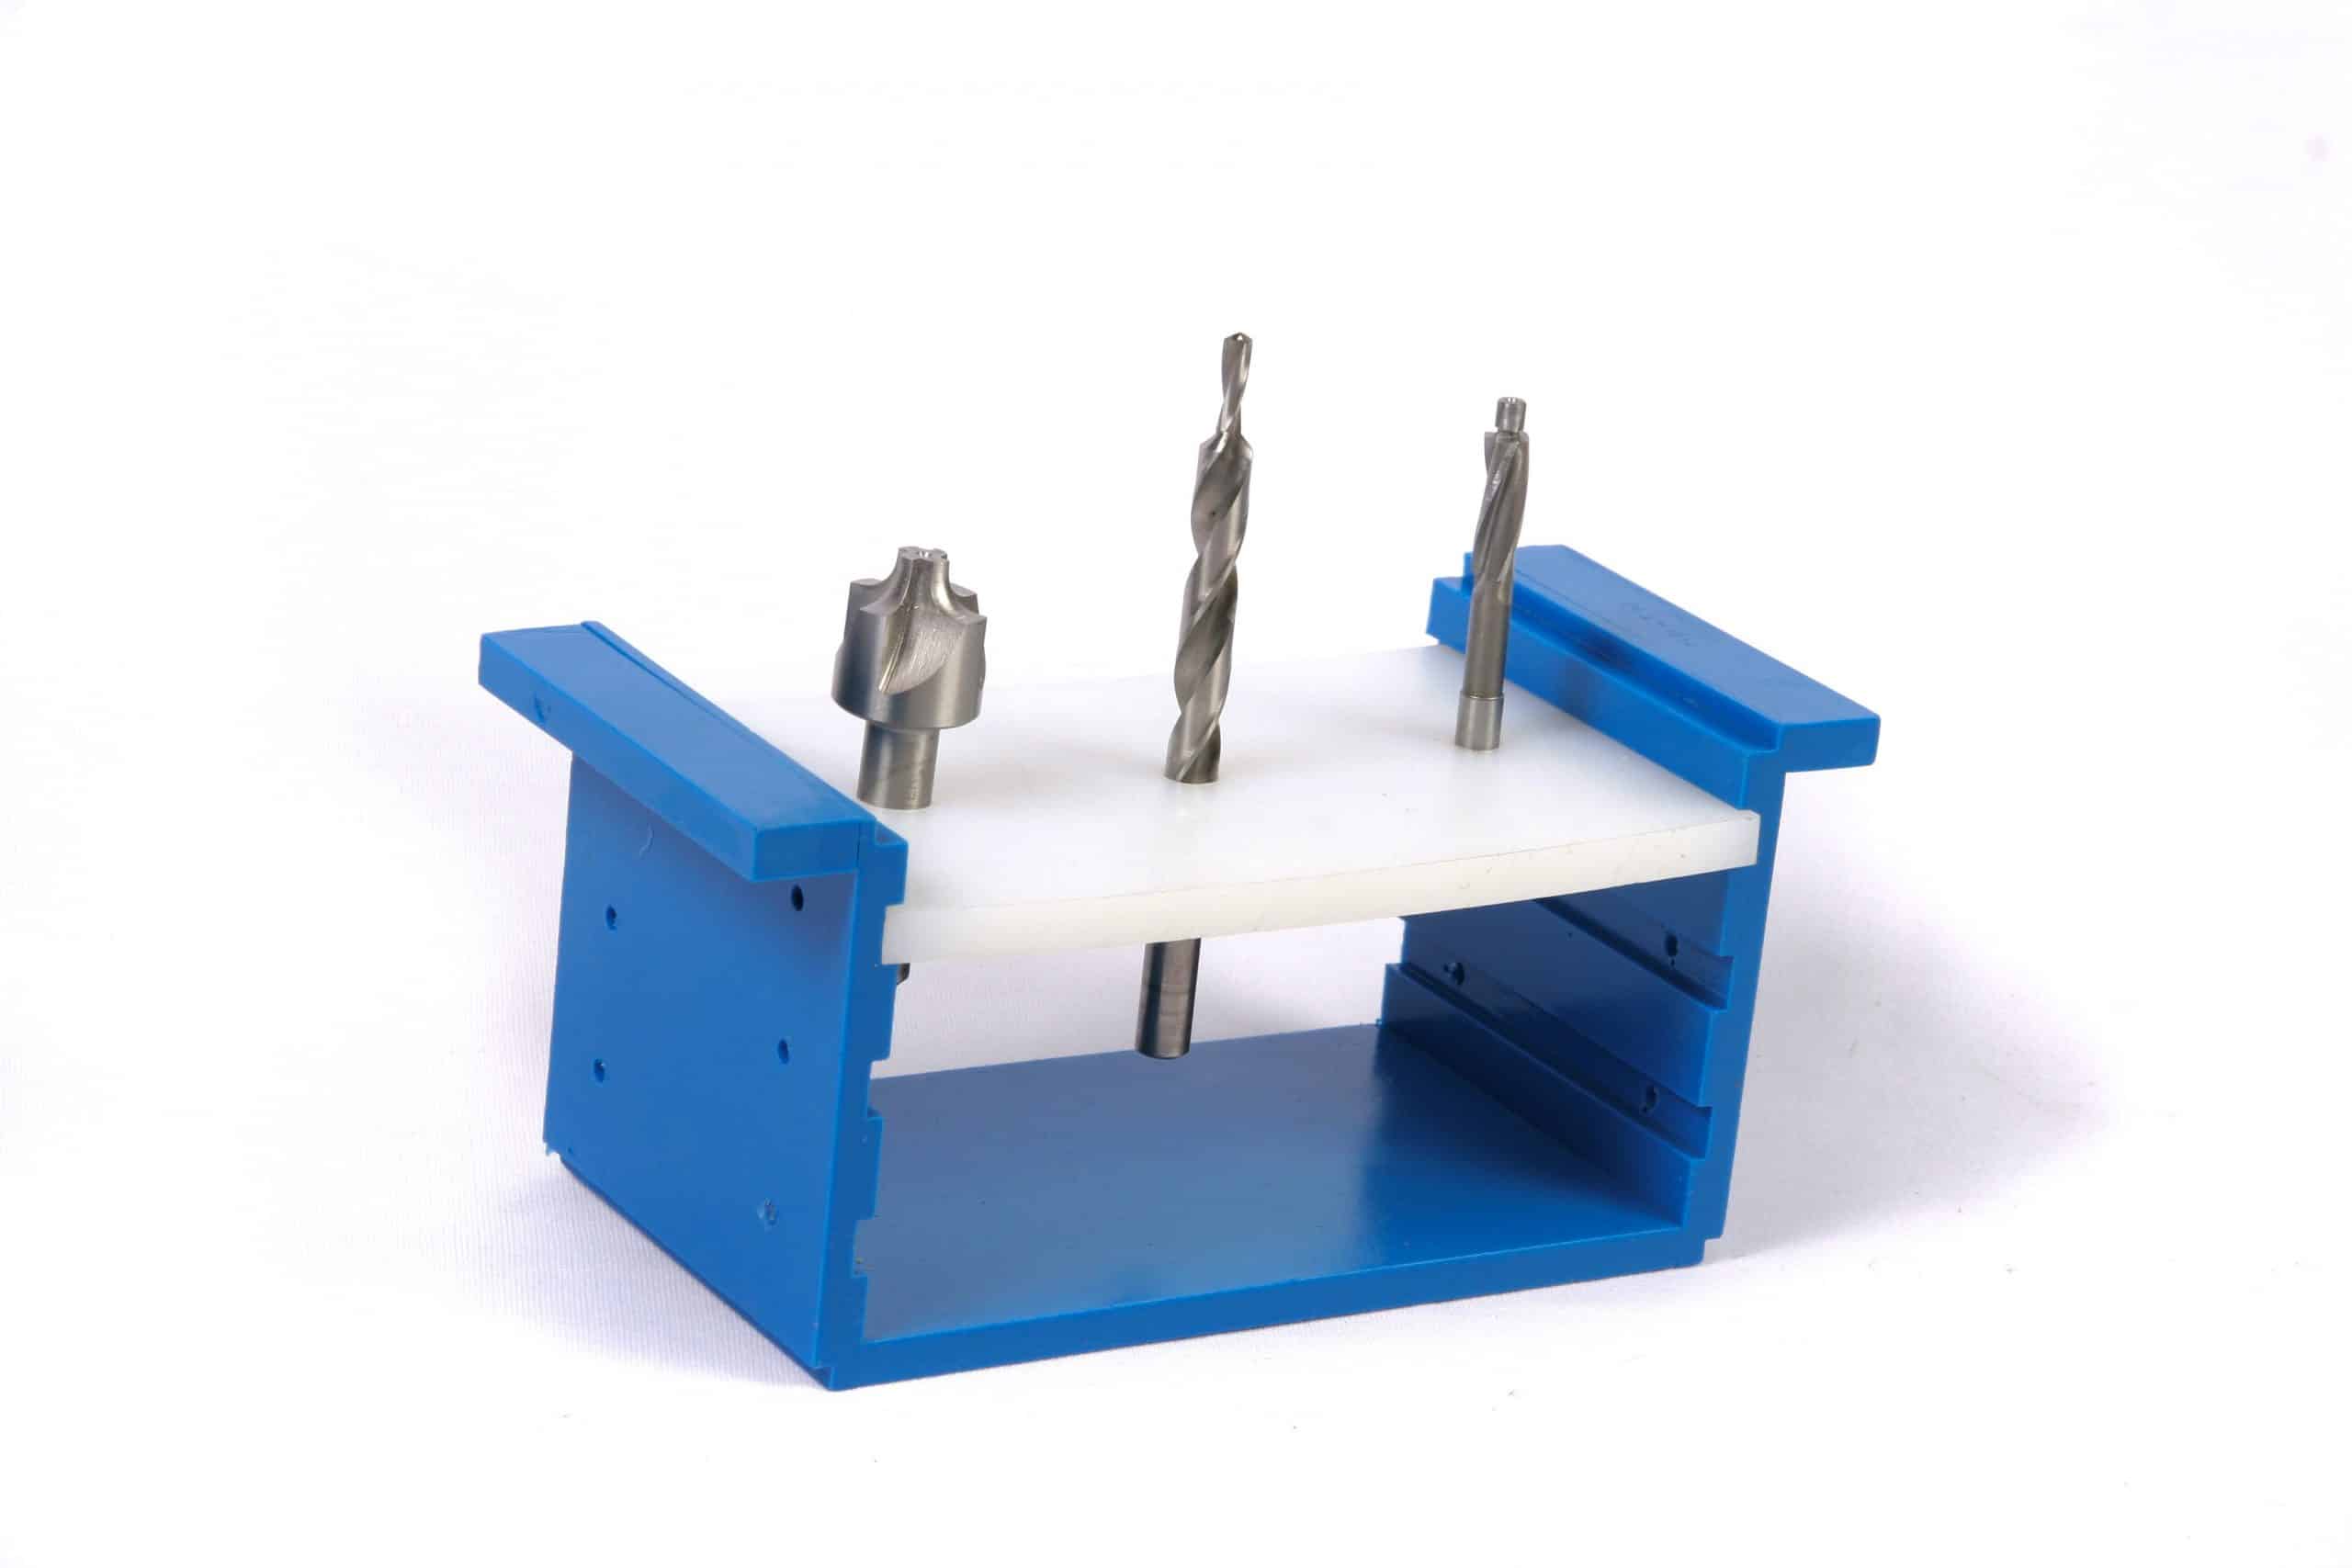 Specialty 3 slot urethane tool tray designed to hold custom tools.